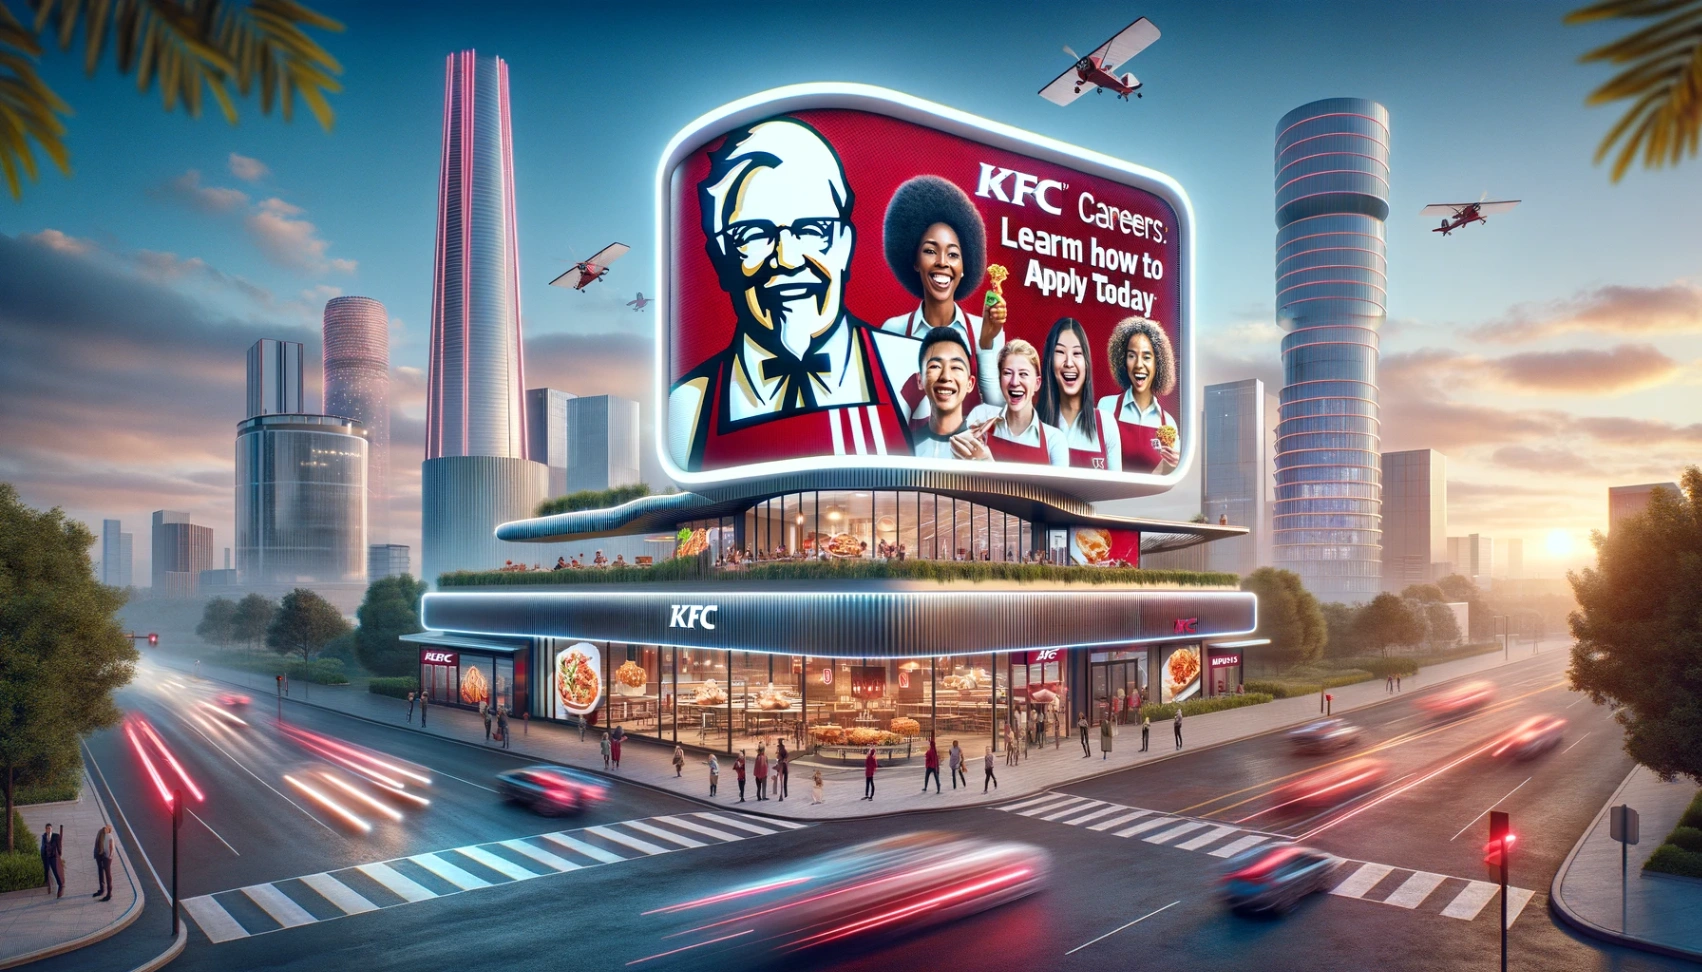 KFC Careers: Learn How to Apply Today